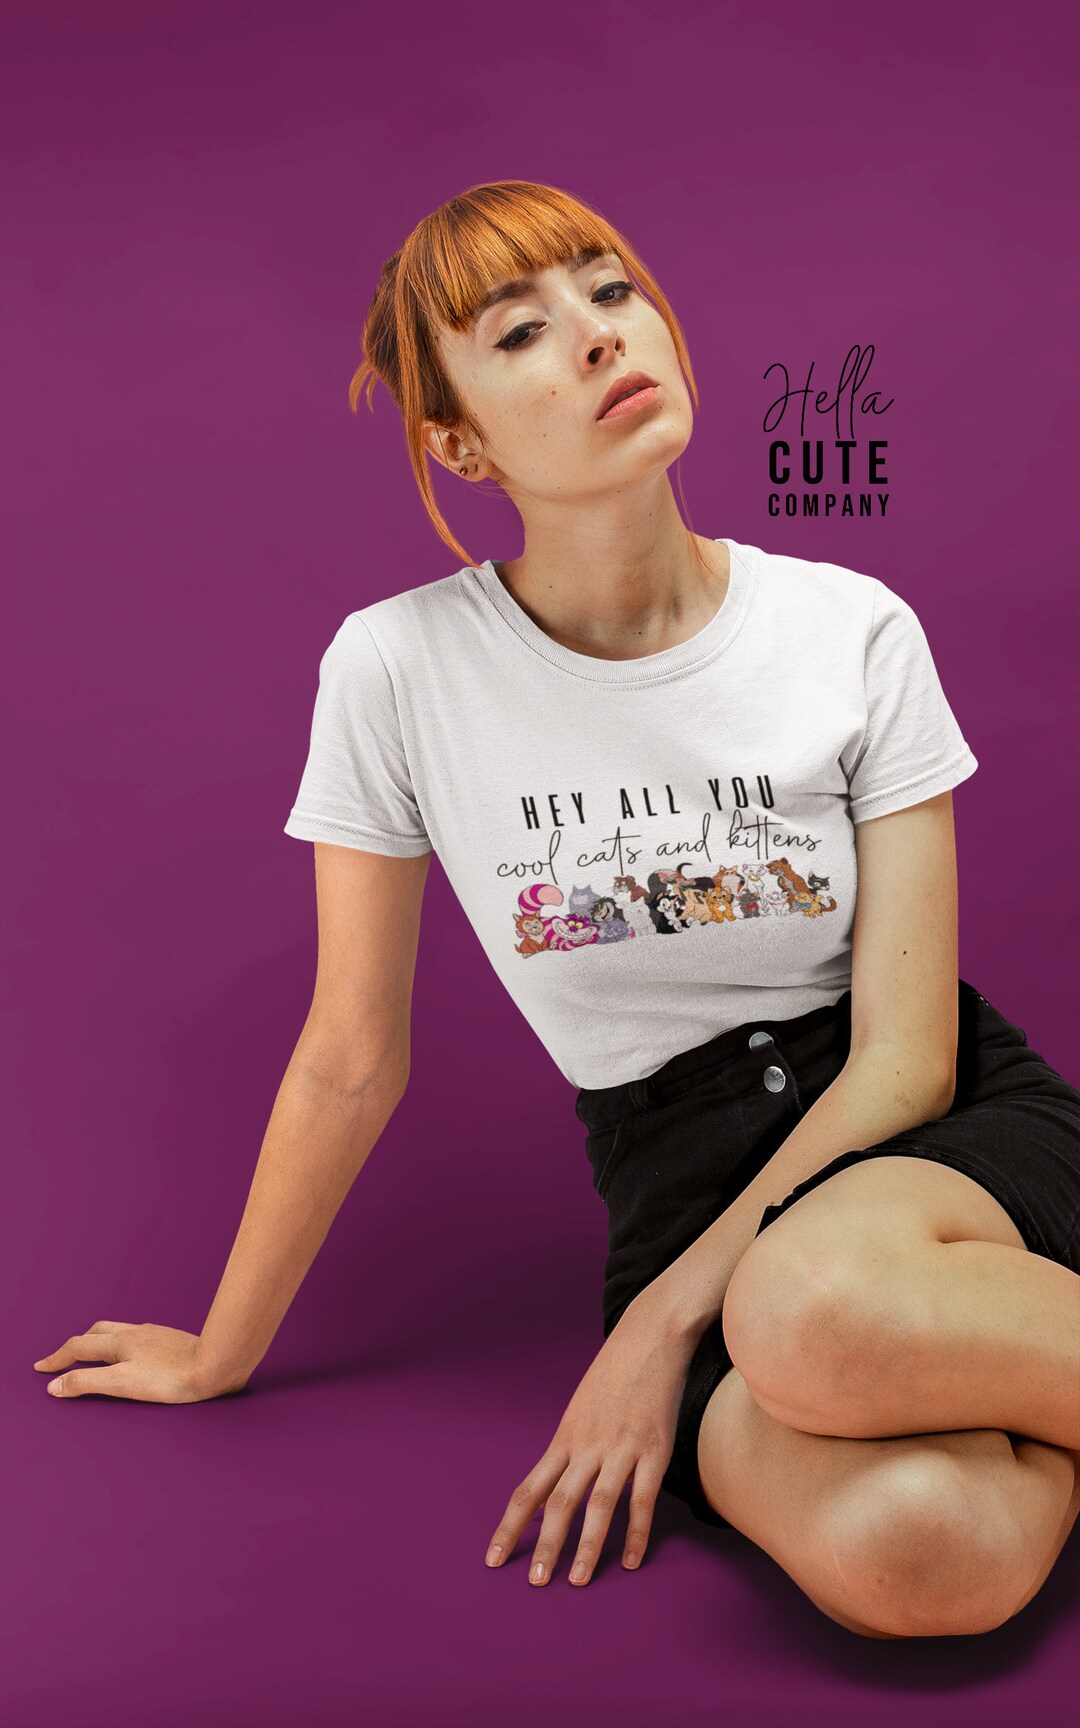 Disney Cats Shirt, Cool Cats and Kittens Shirt, Cats of Disney Shirt -   Canada